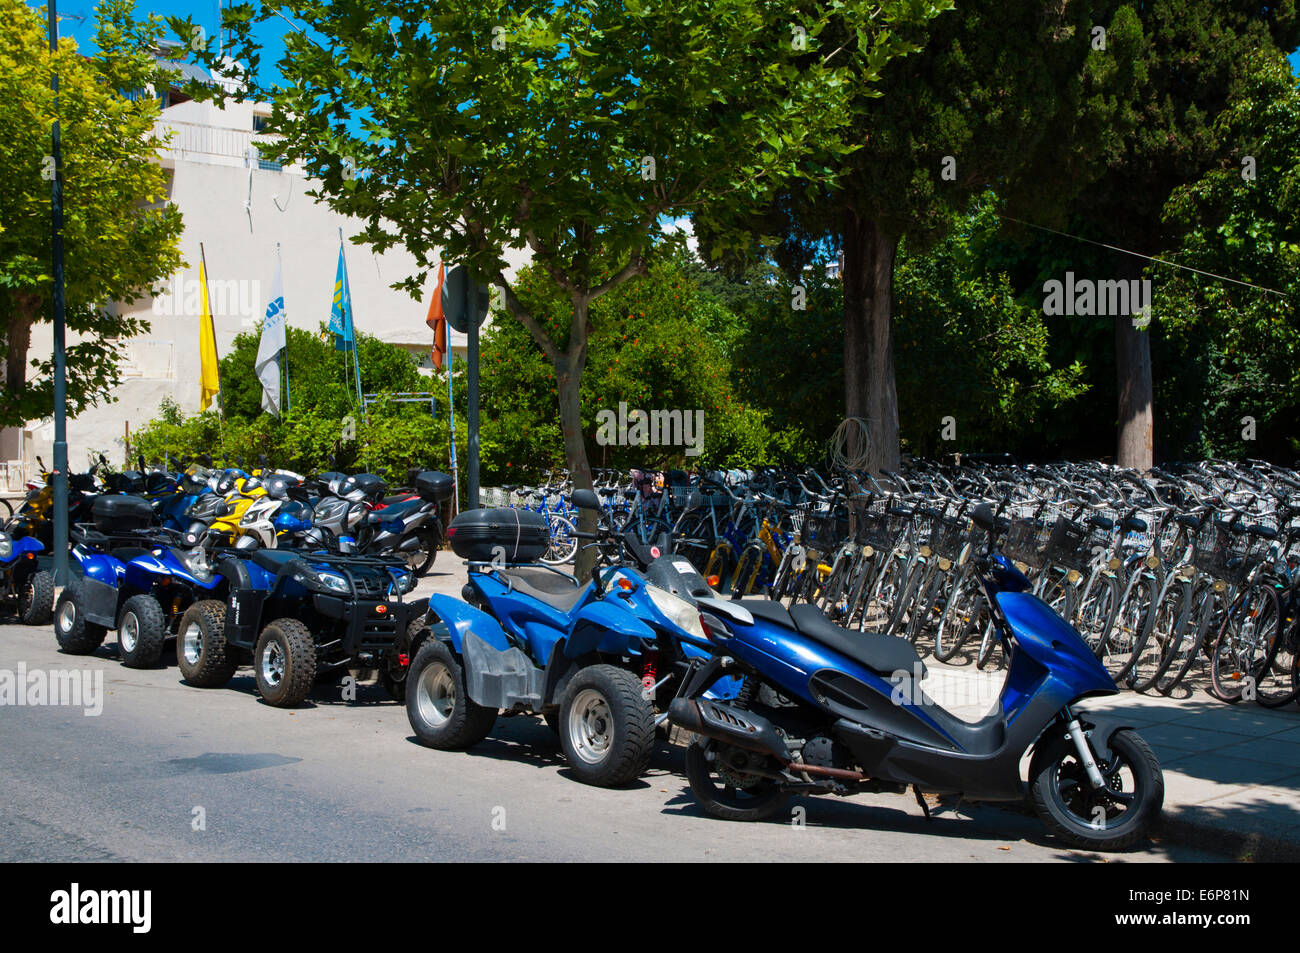 Greece moped transport -Fotos und -Bildmaterial in hoher Auflösung – Alamy